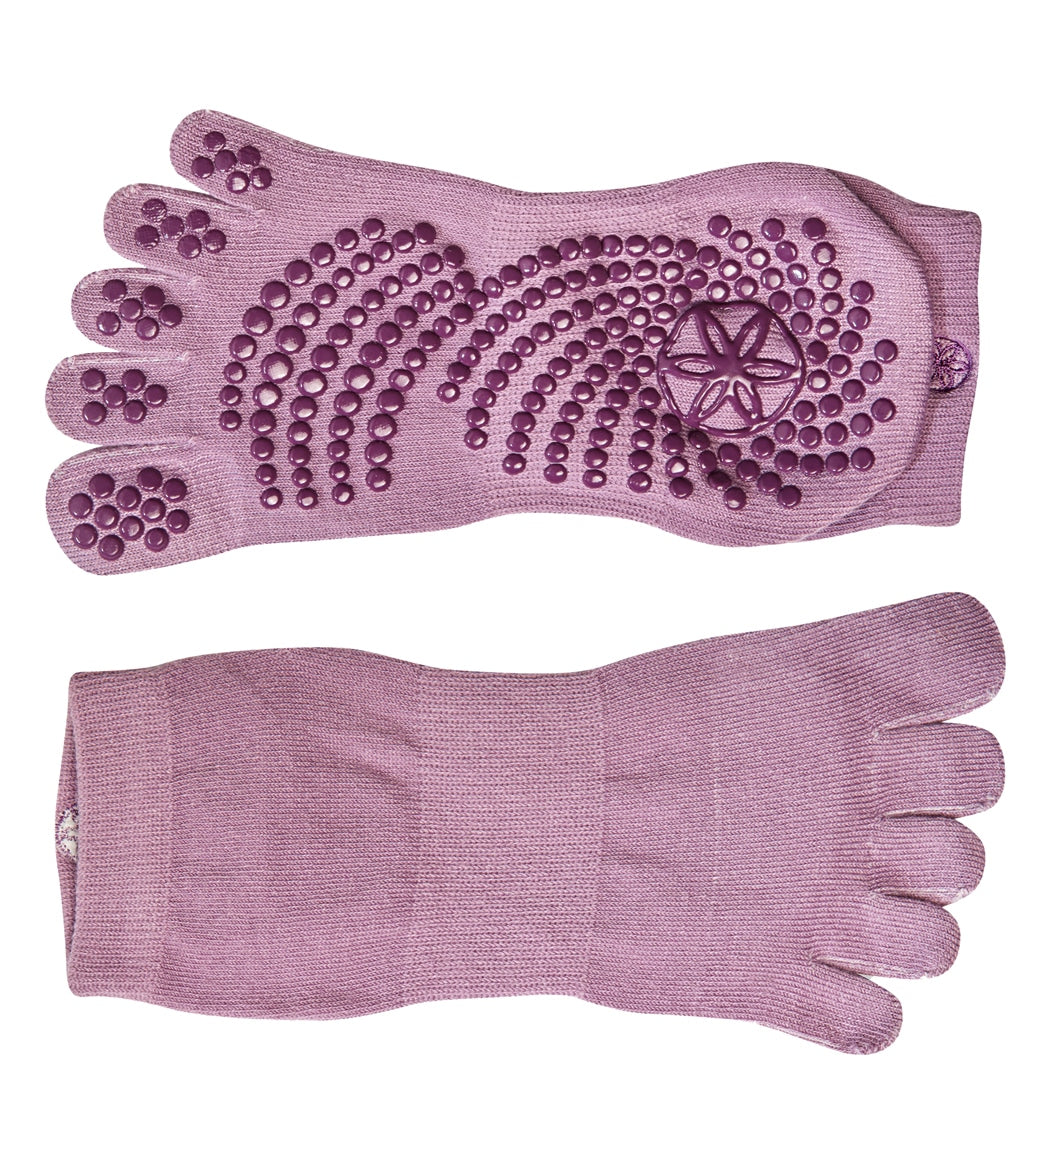 Gaiam Grippy Classic Yoga Socks (2 Pack) at